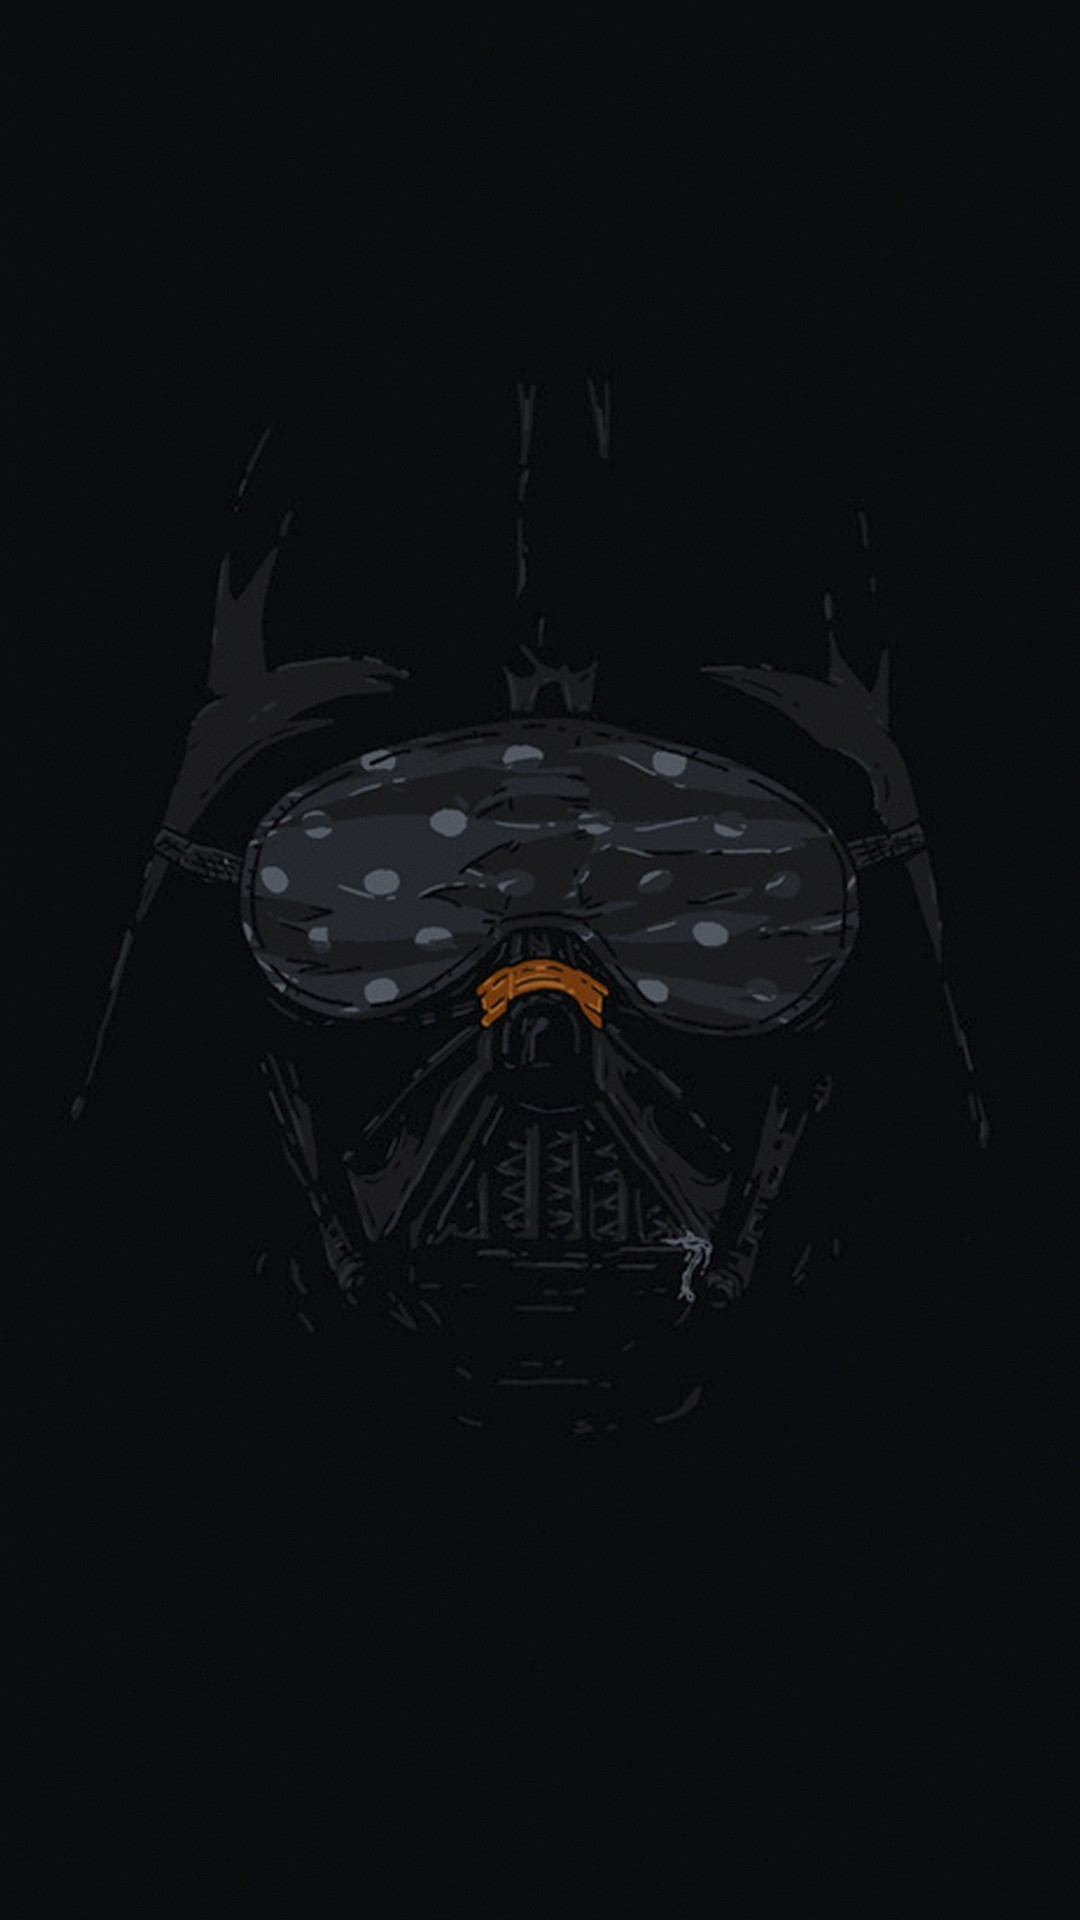 1080x1920 Darth Vader Wallpaper Elegant Star Wars 7 Wallpaper iPhone.